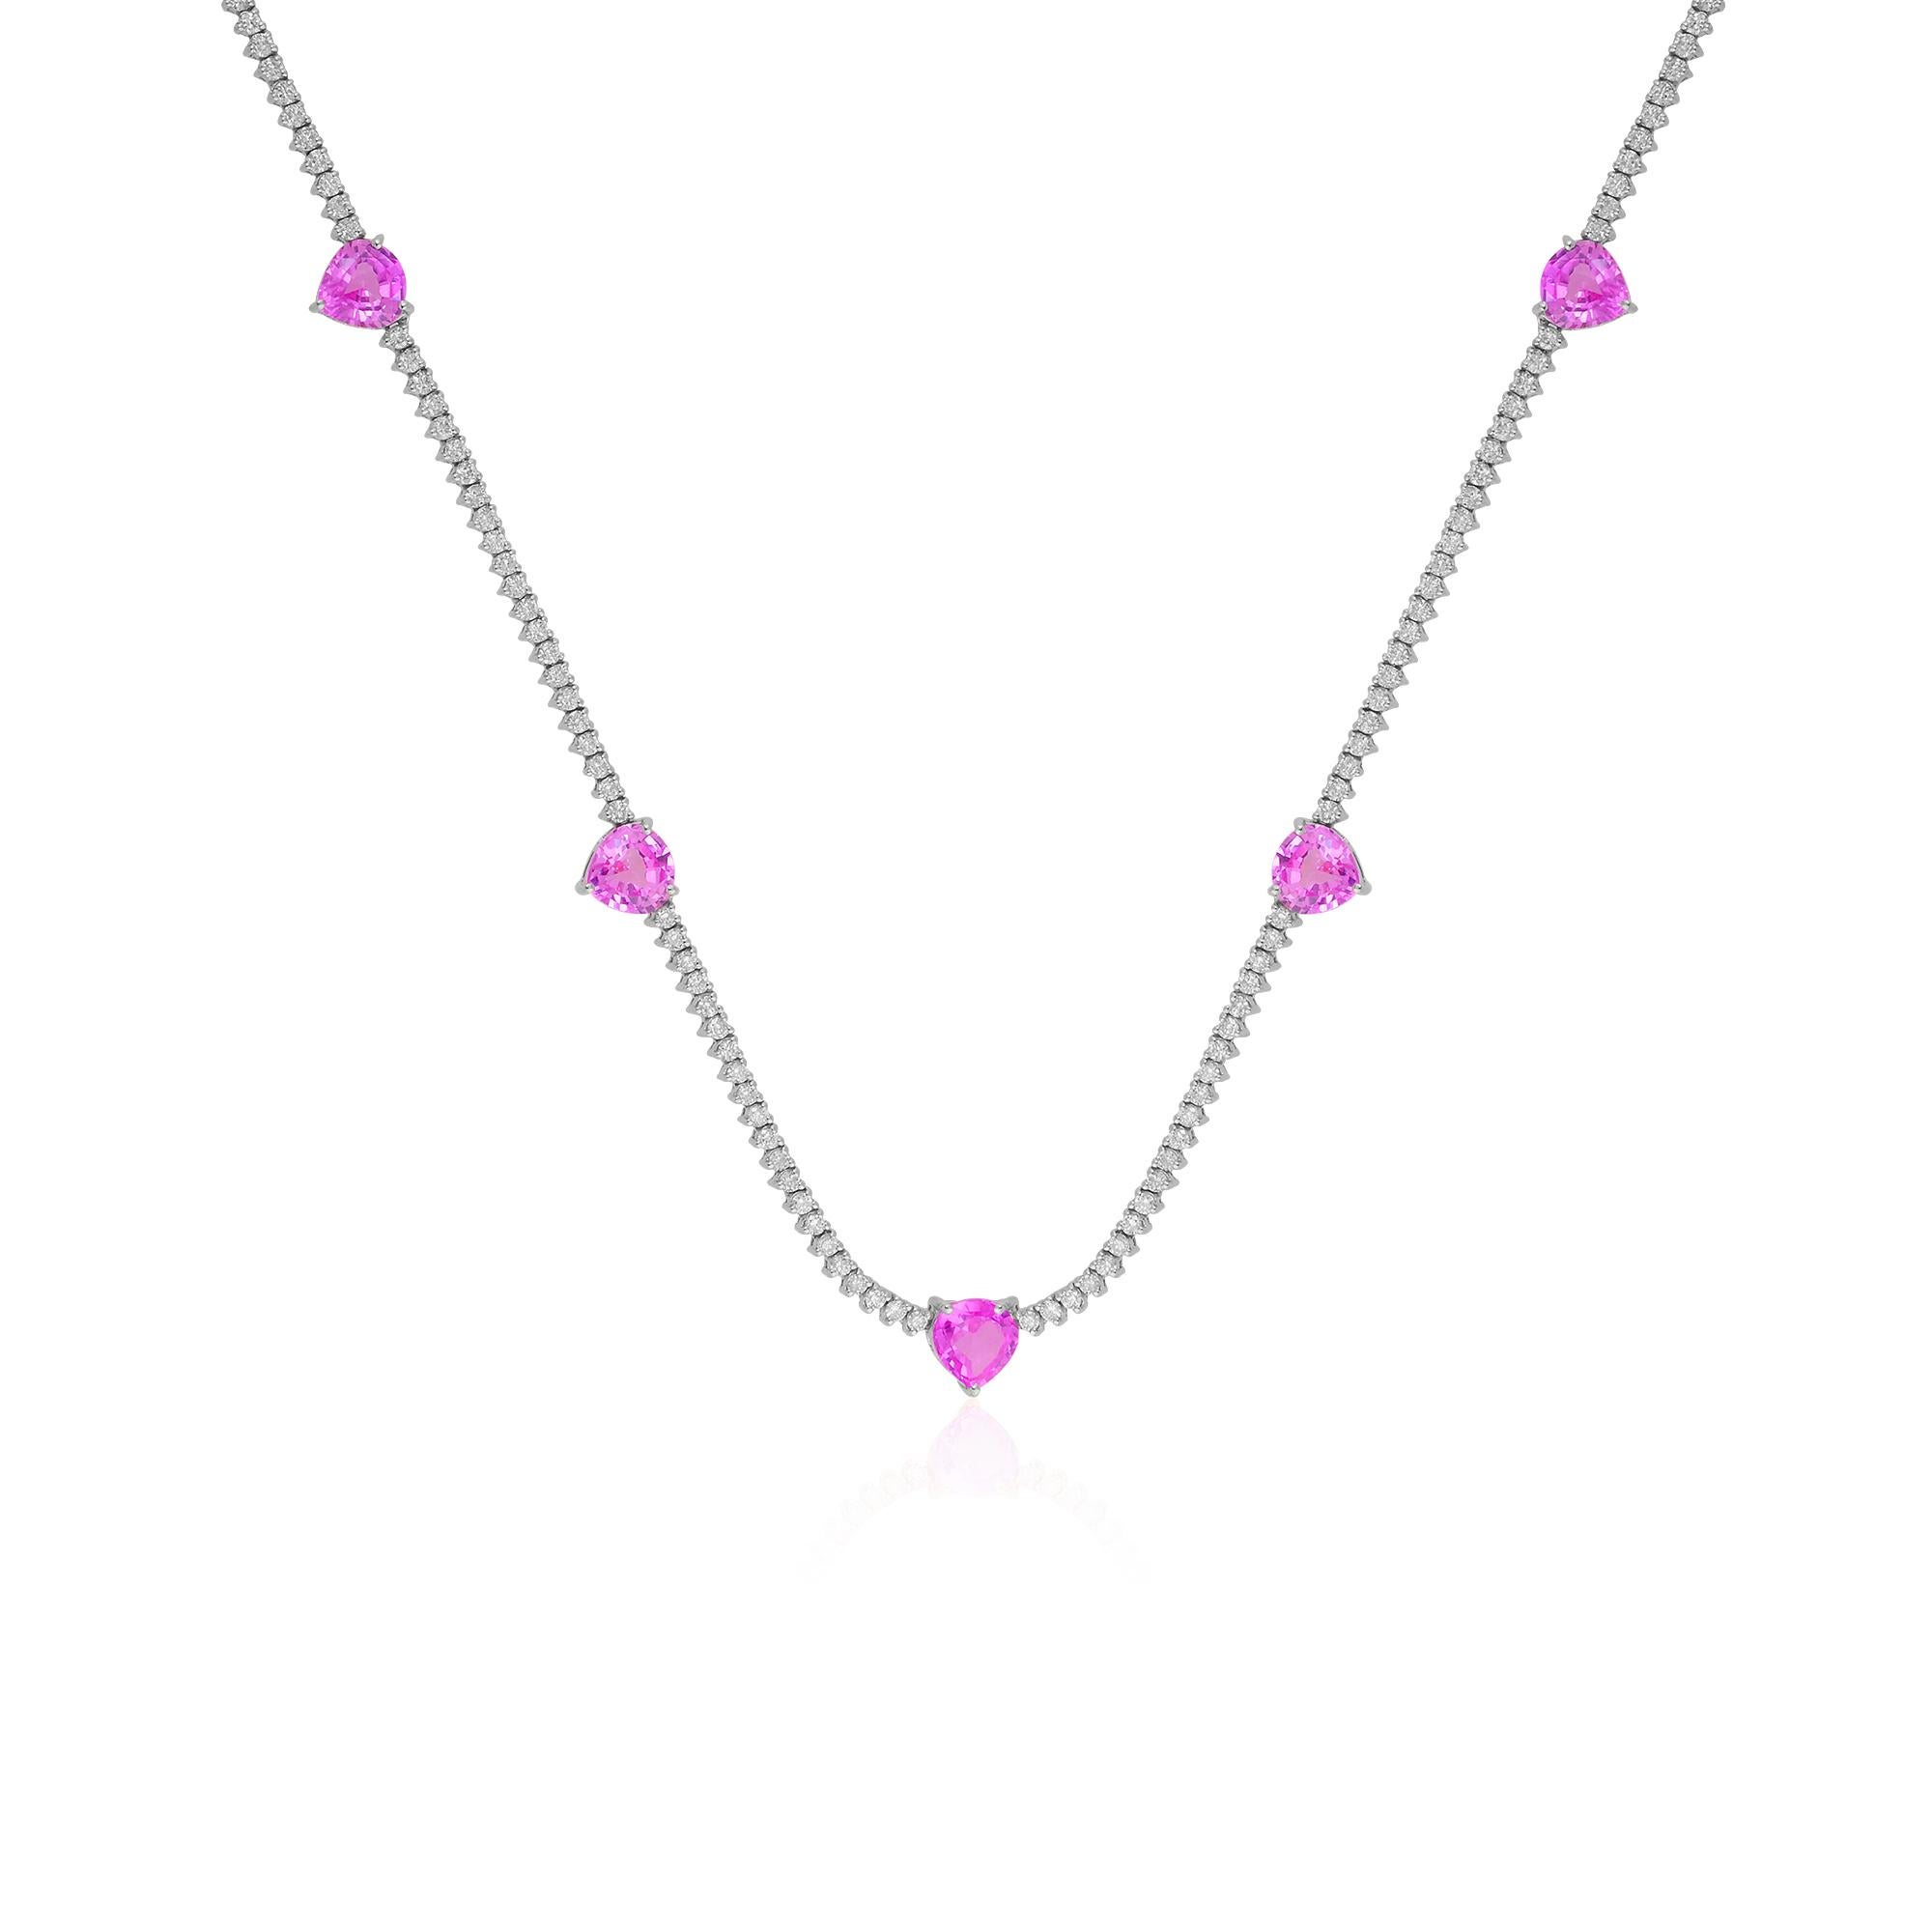 Round Cut Heart Shape Pink Gemstone Necklace Diamond 18 Karat White Gold Handmade Jewelry For Sale